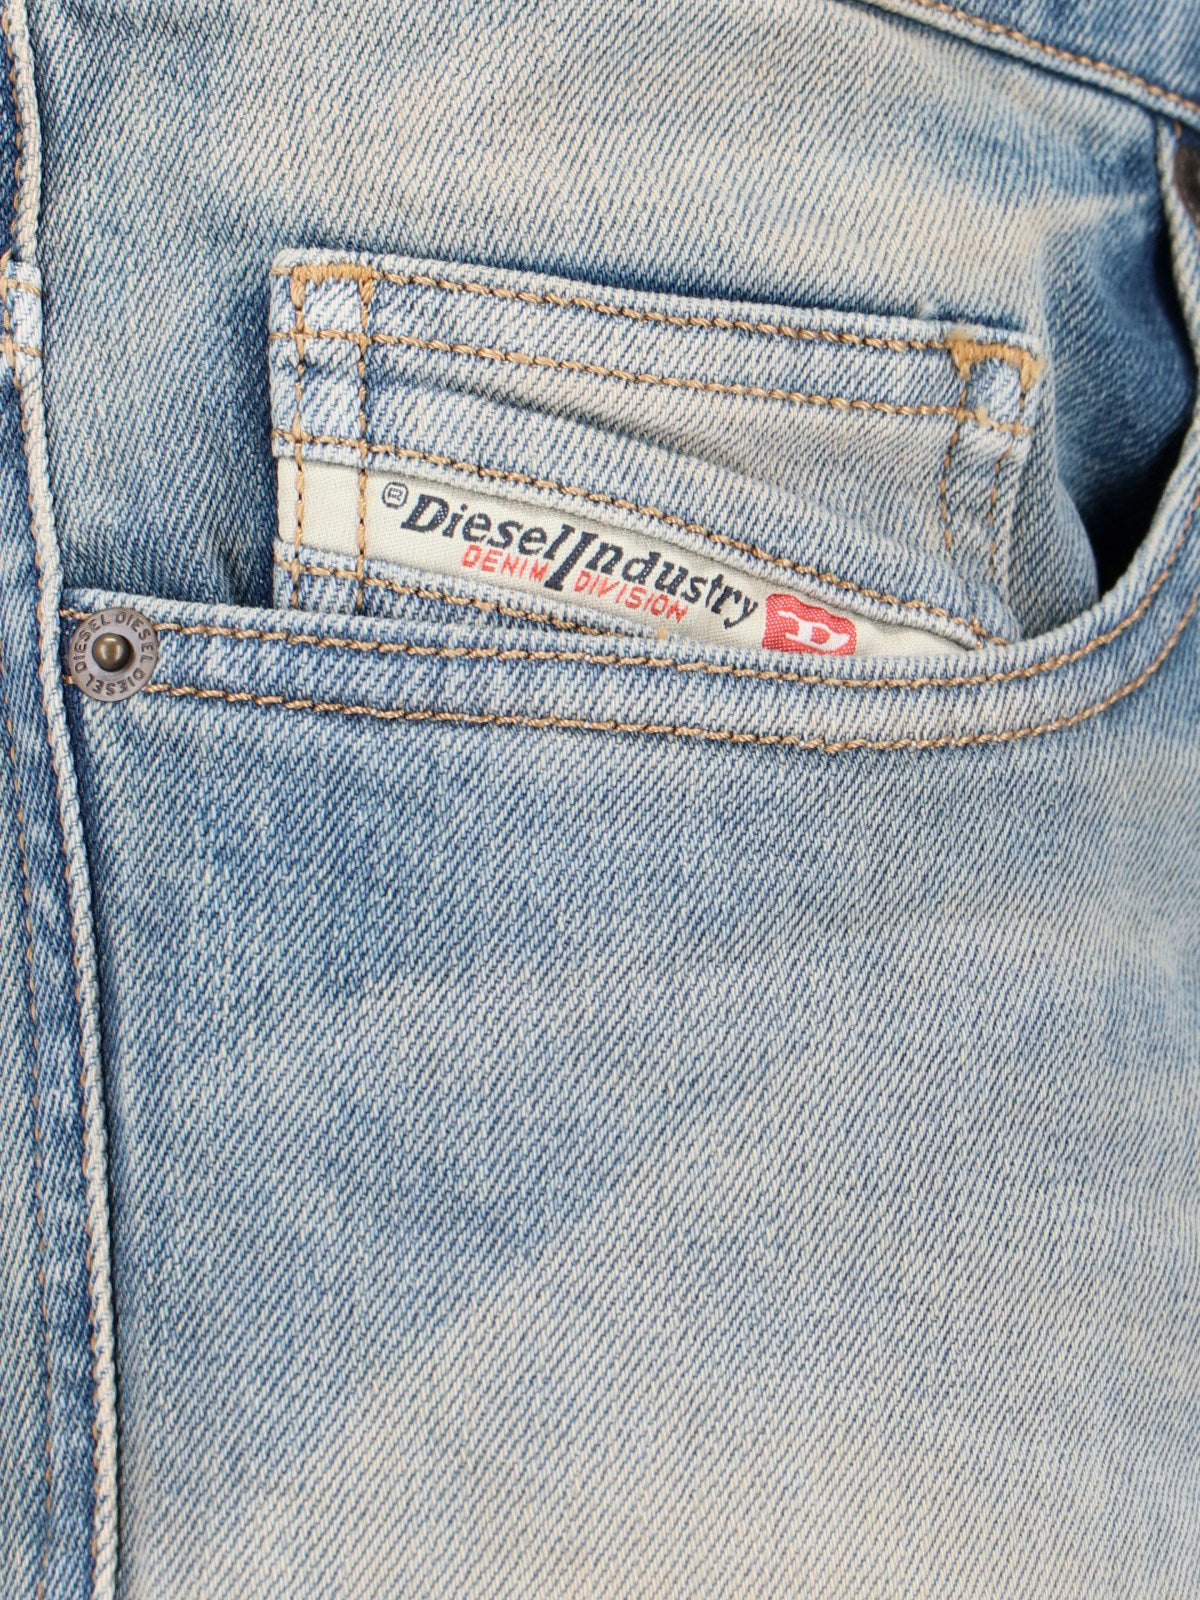 Diesel Jeans bootcut-Pantaloni flare-Diesel-Jeans bootcut Diesel, in denim azzurro, passanti cintura, chiusura bottoni, design cinque tasche, dettaglio patch logo applicata retro, gamba svasata.-Dresso